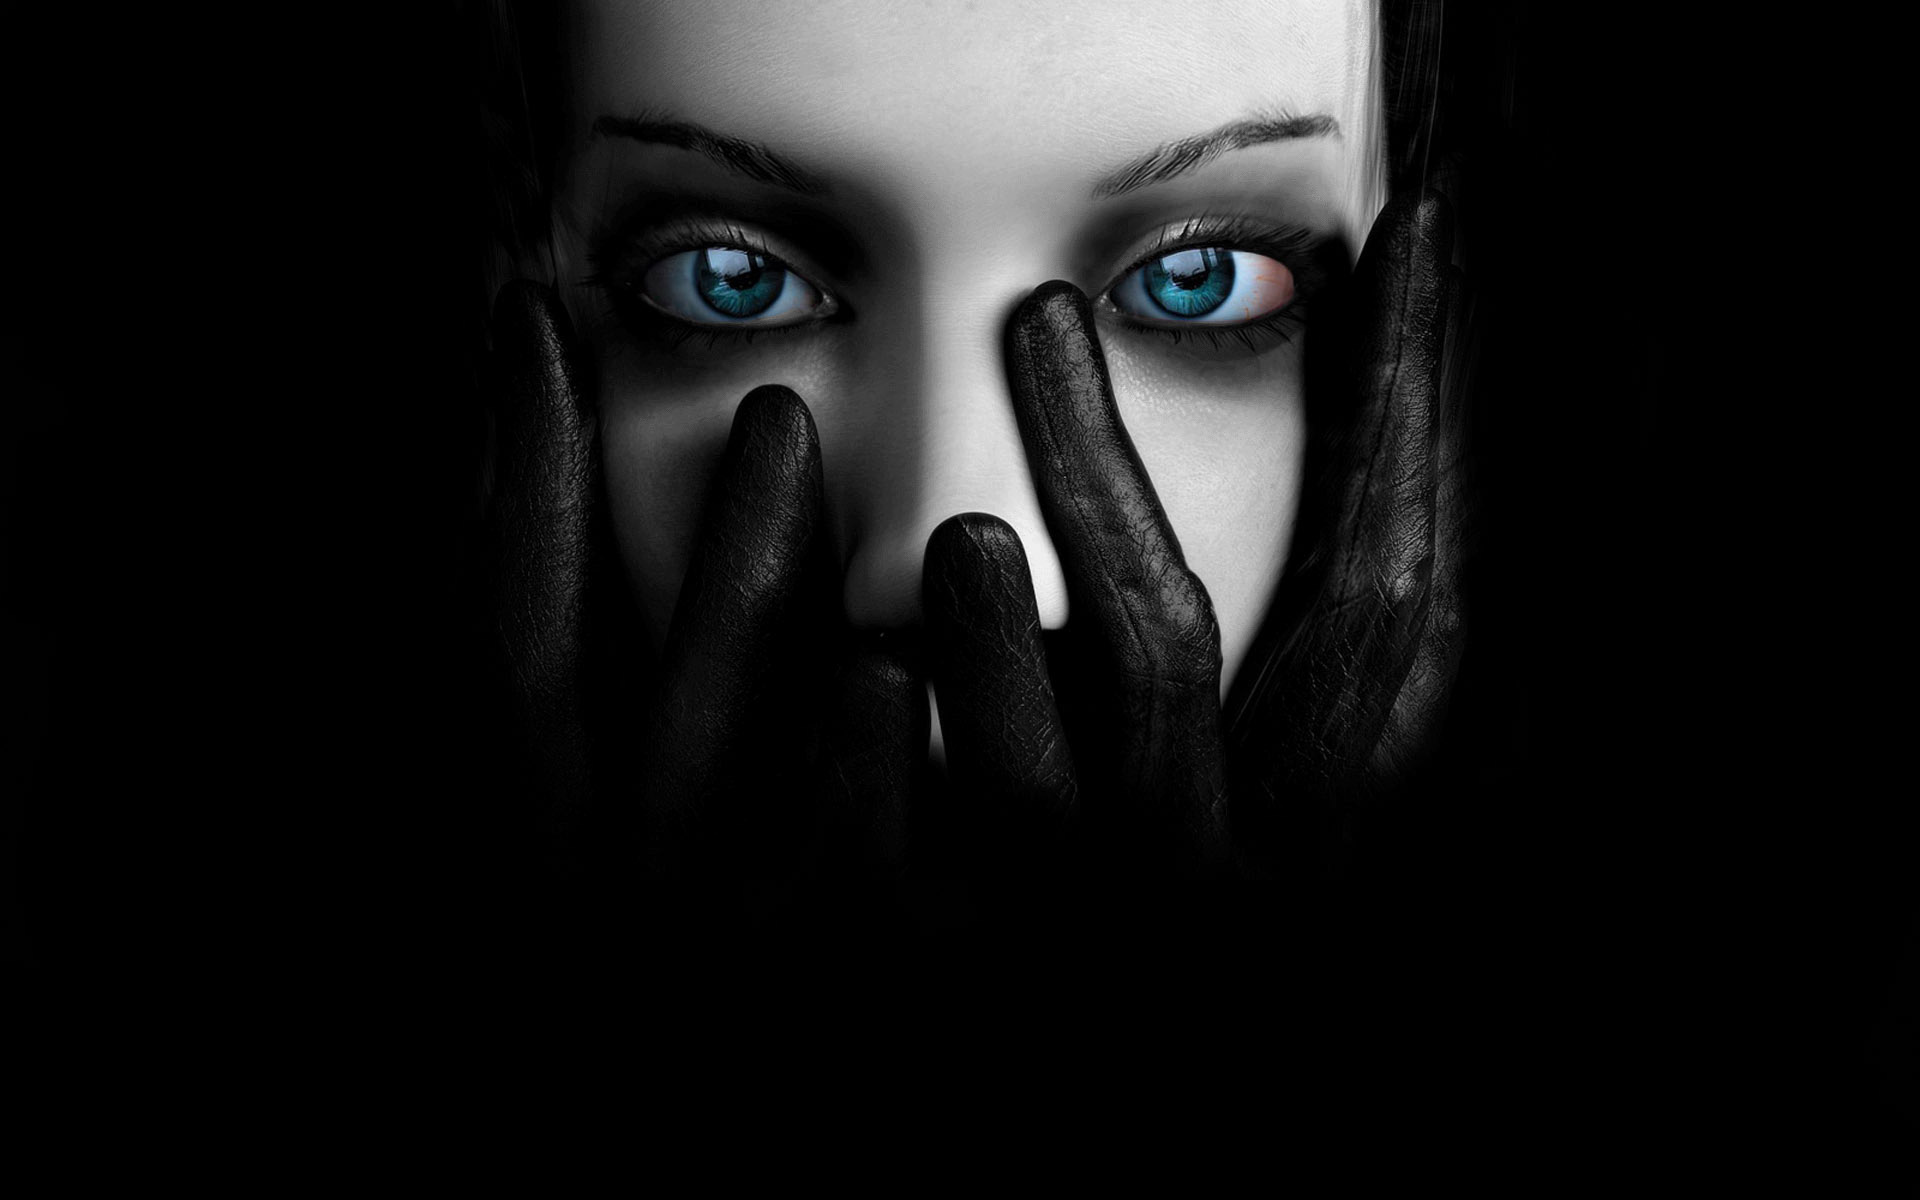 Sky Blue Eye Girl Hiding Her Face With Haer Hands Black